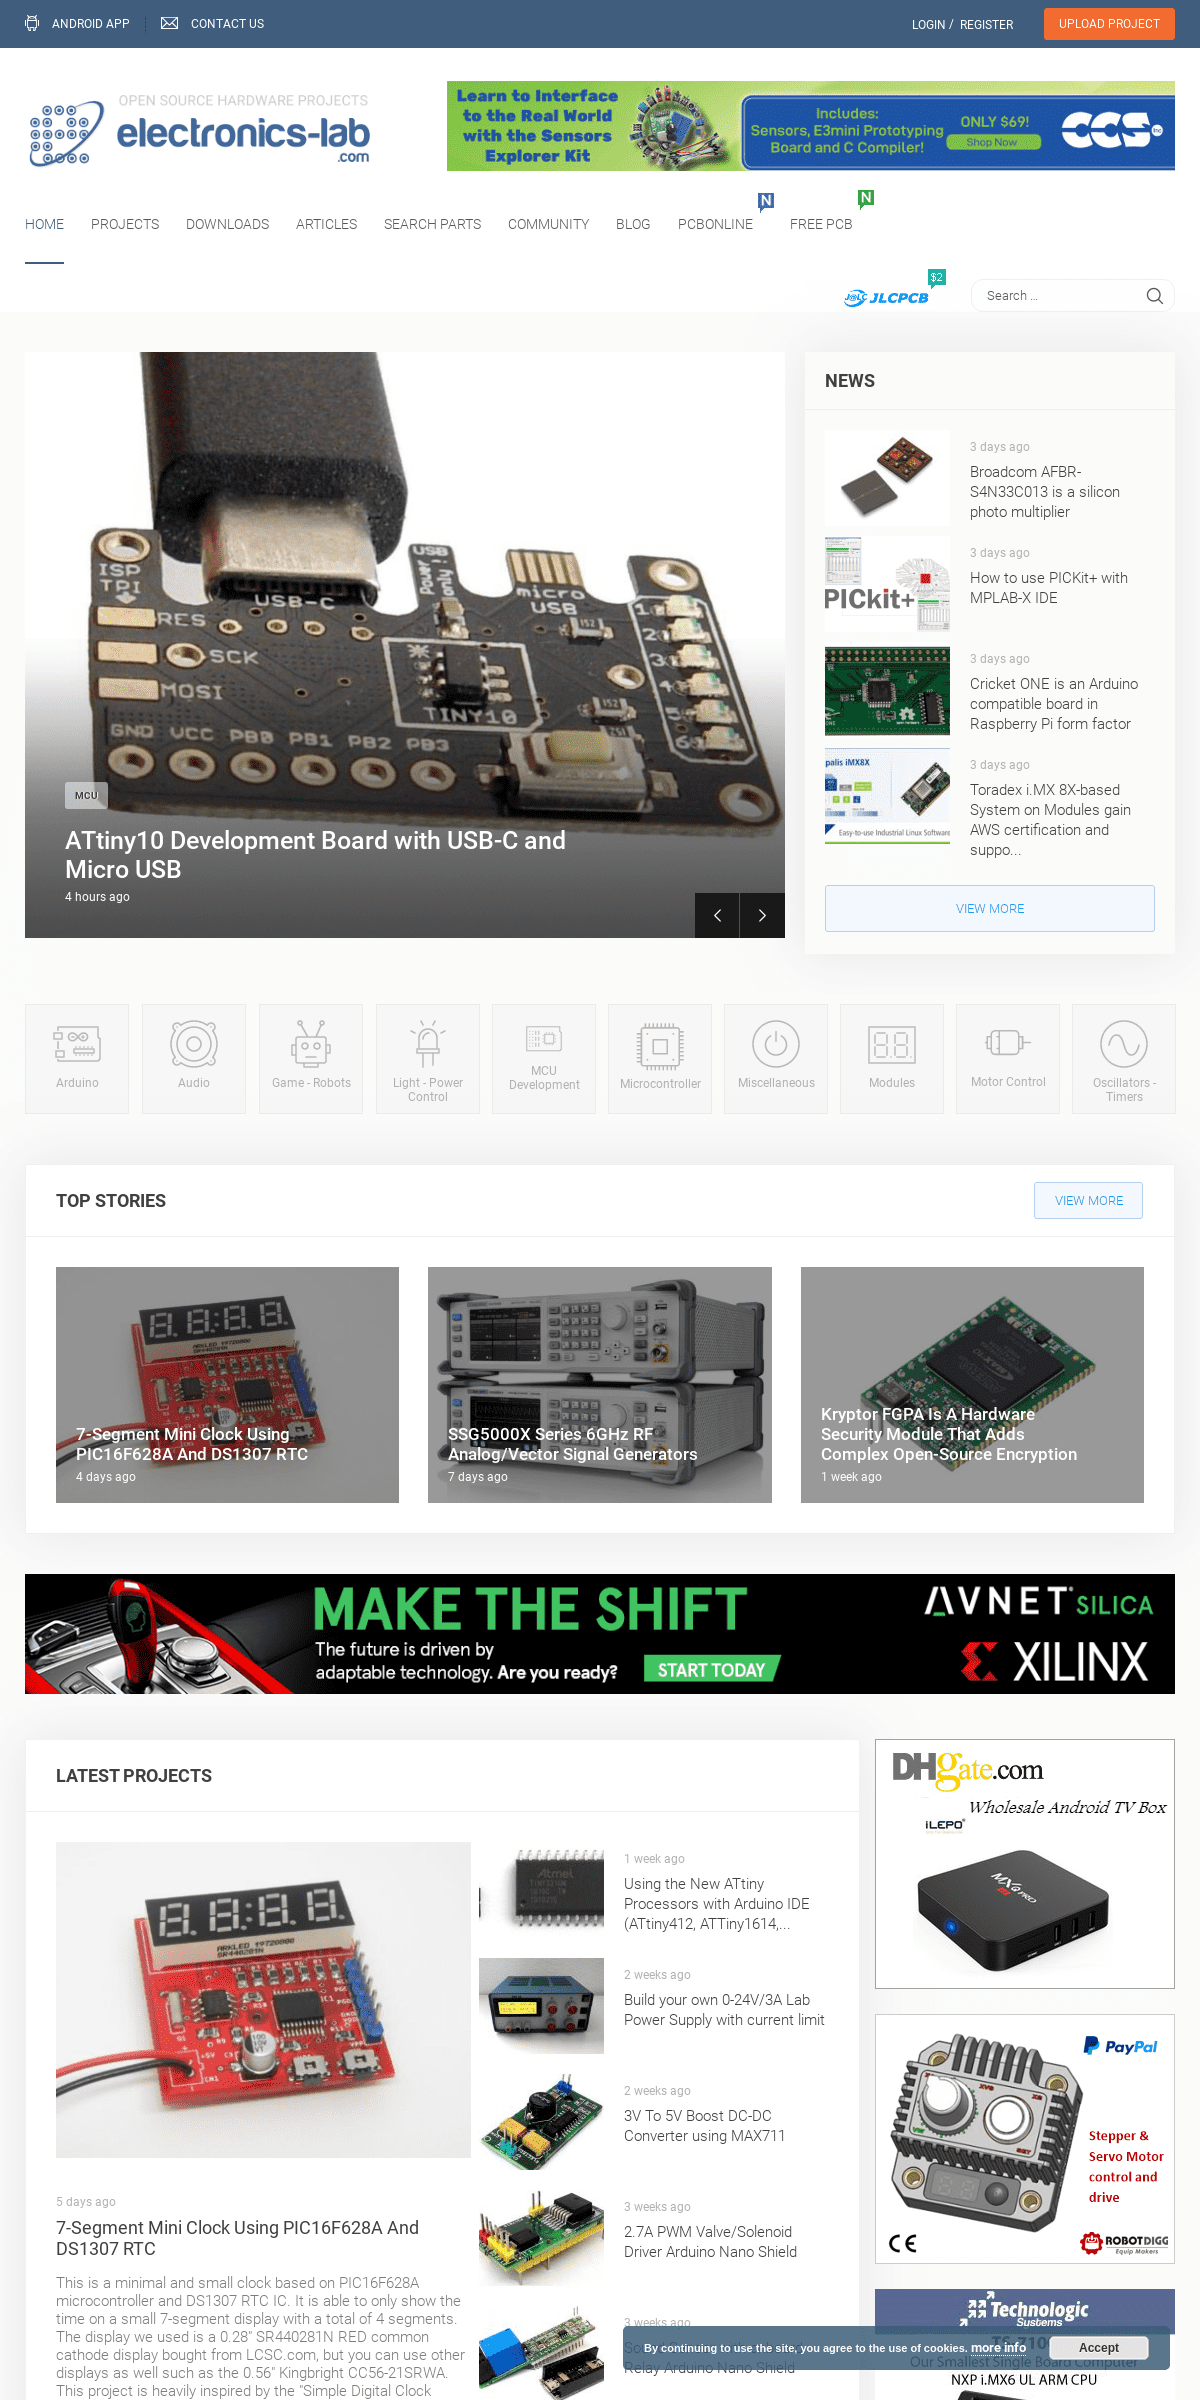 A complete backup of electronics-lab.com